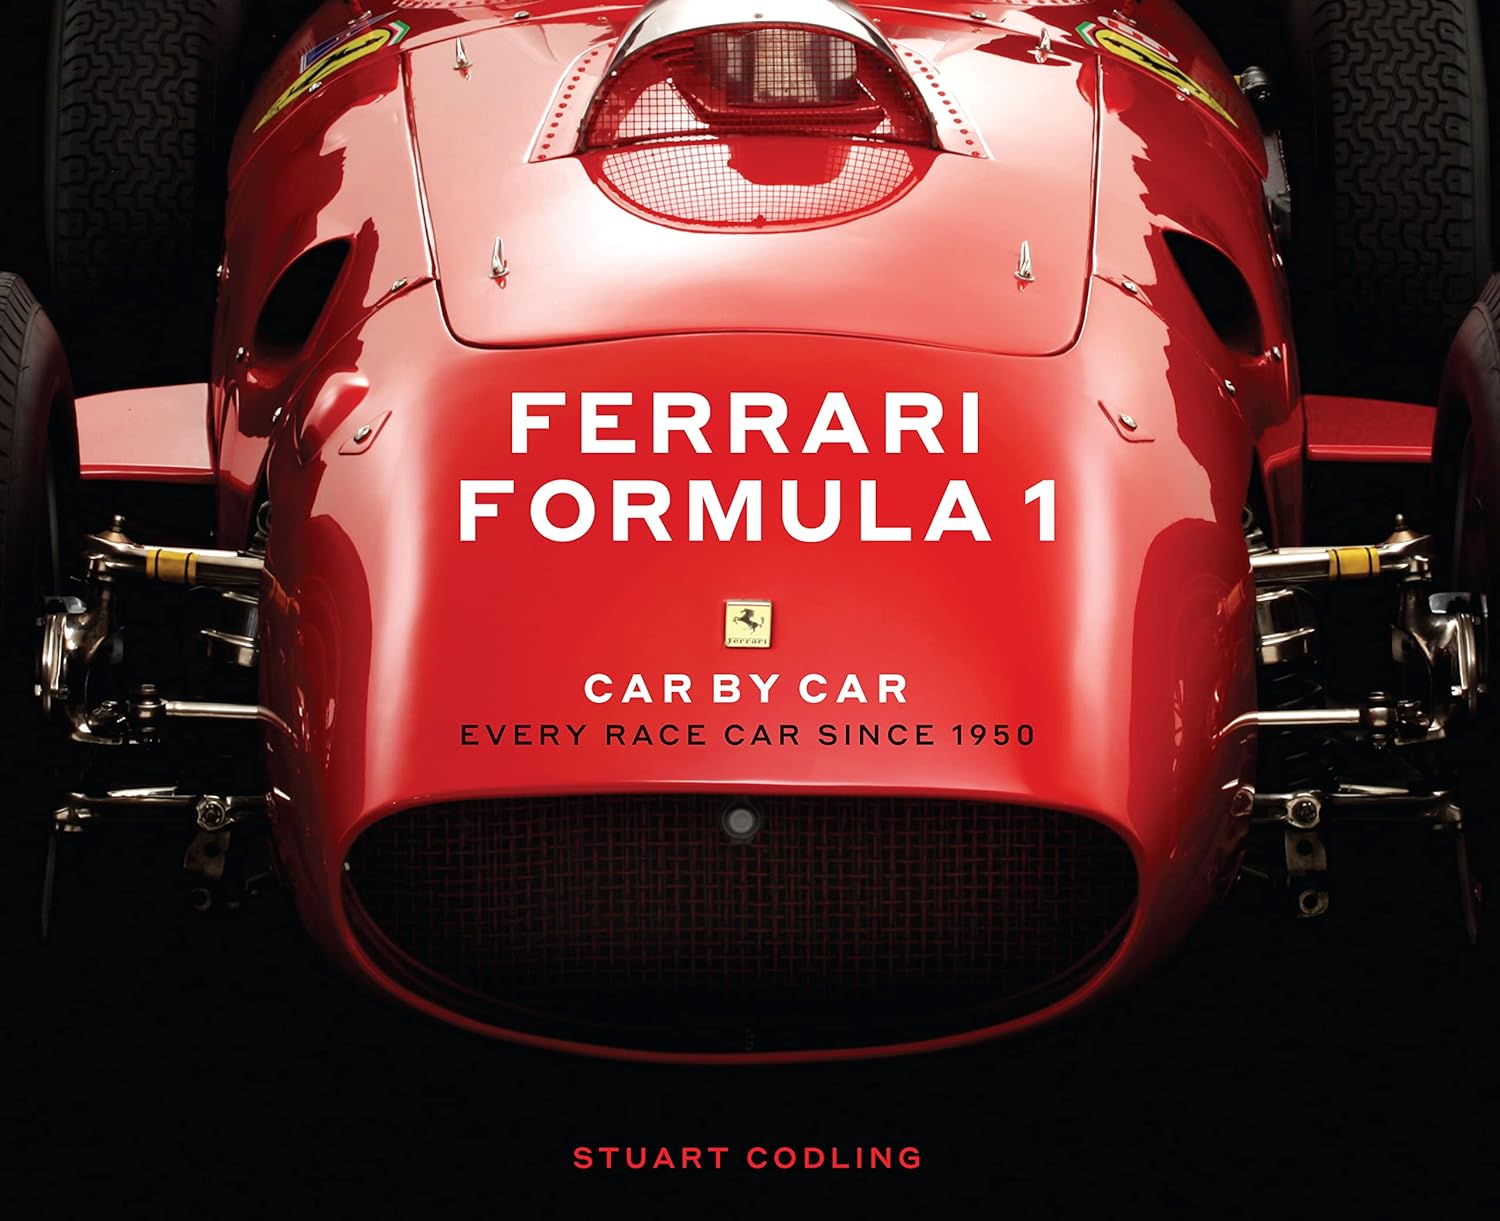 Ferrari Formula 1 Car by Car: Every Race Car Since